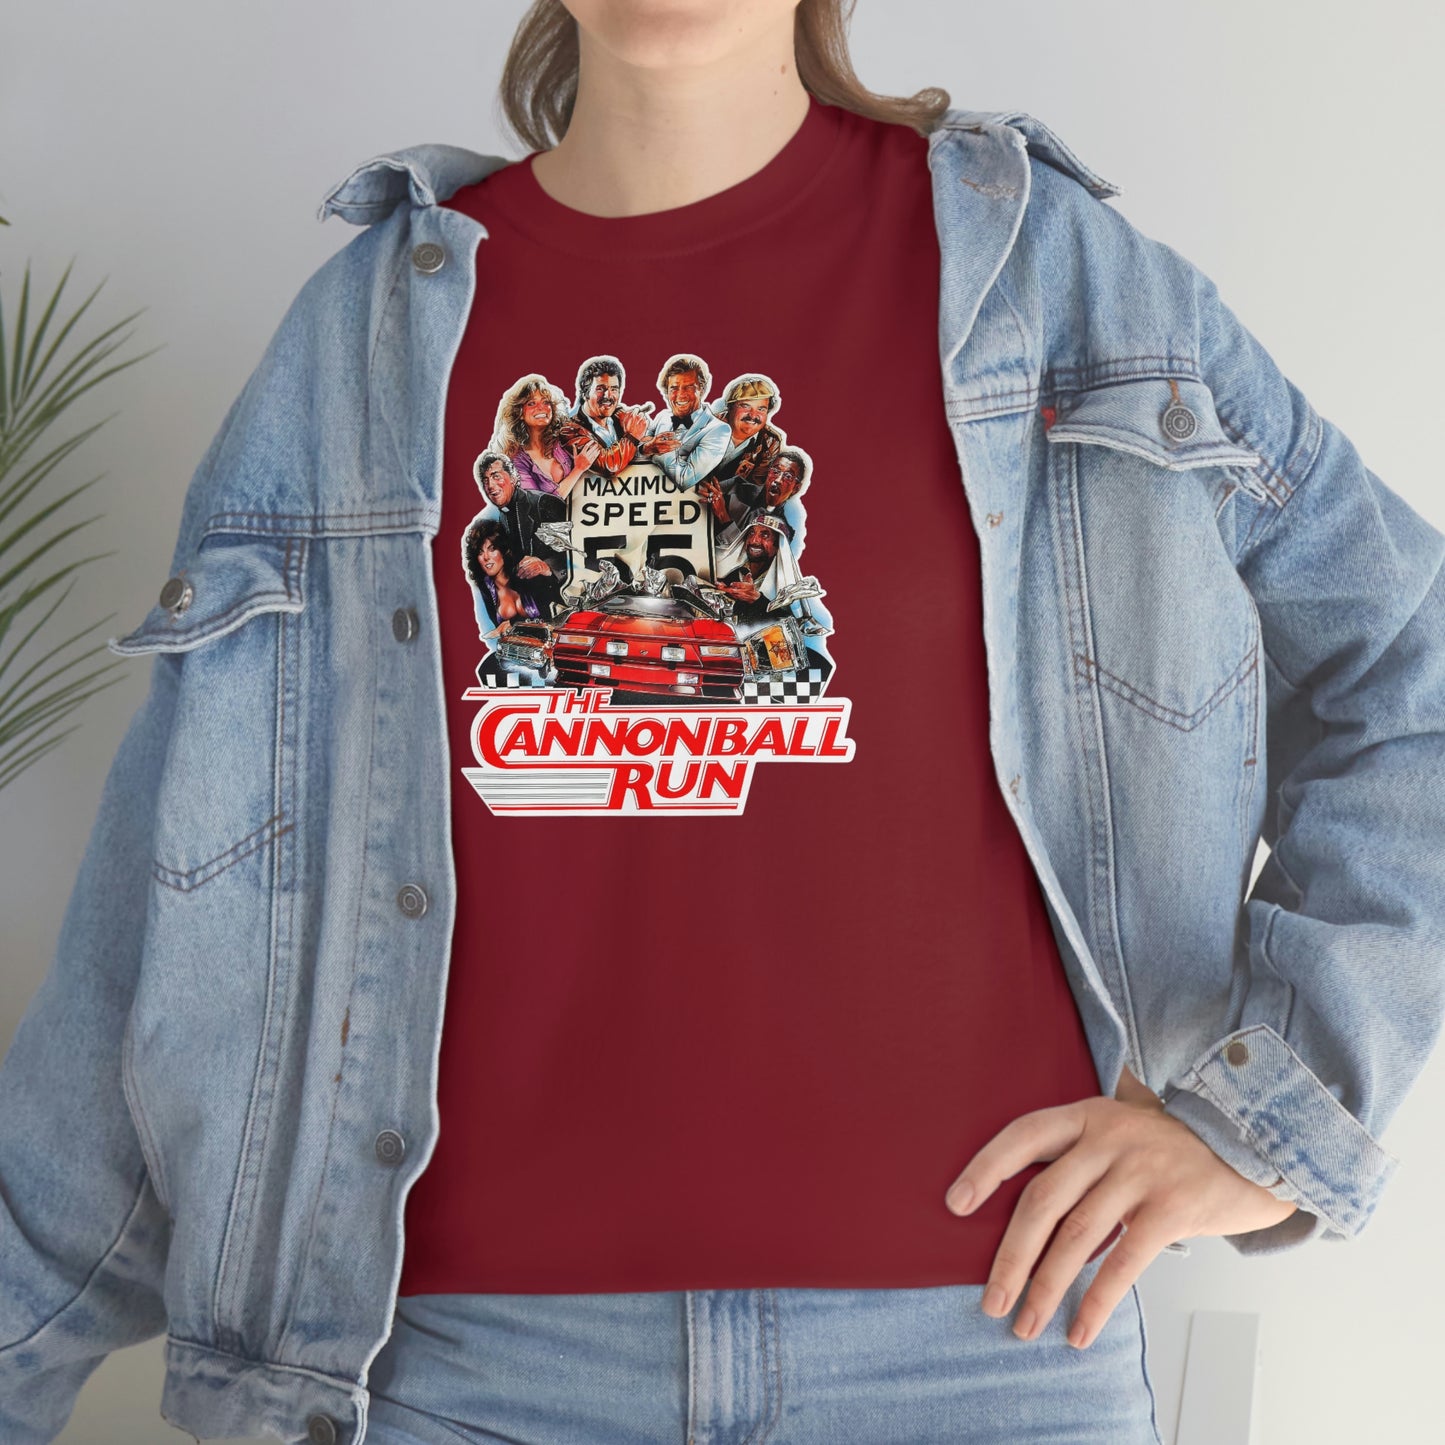 The Cannonball Run T-Shirt